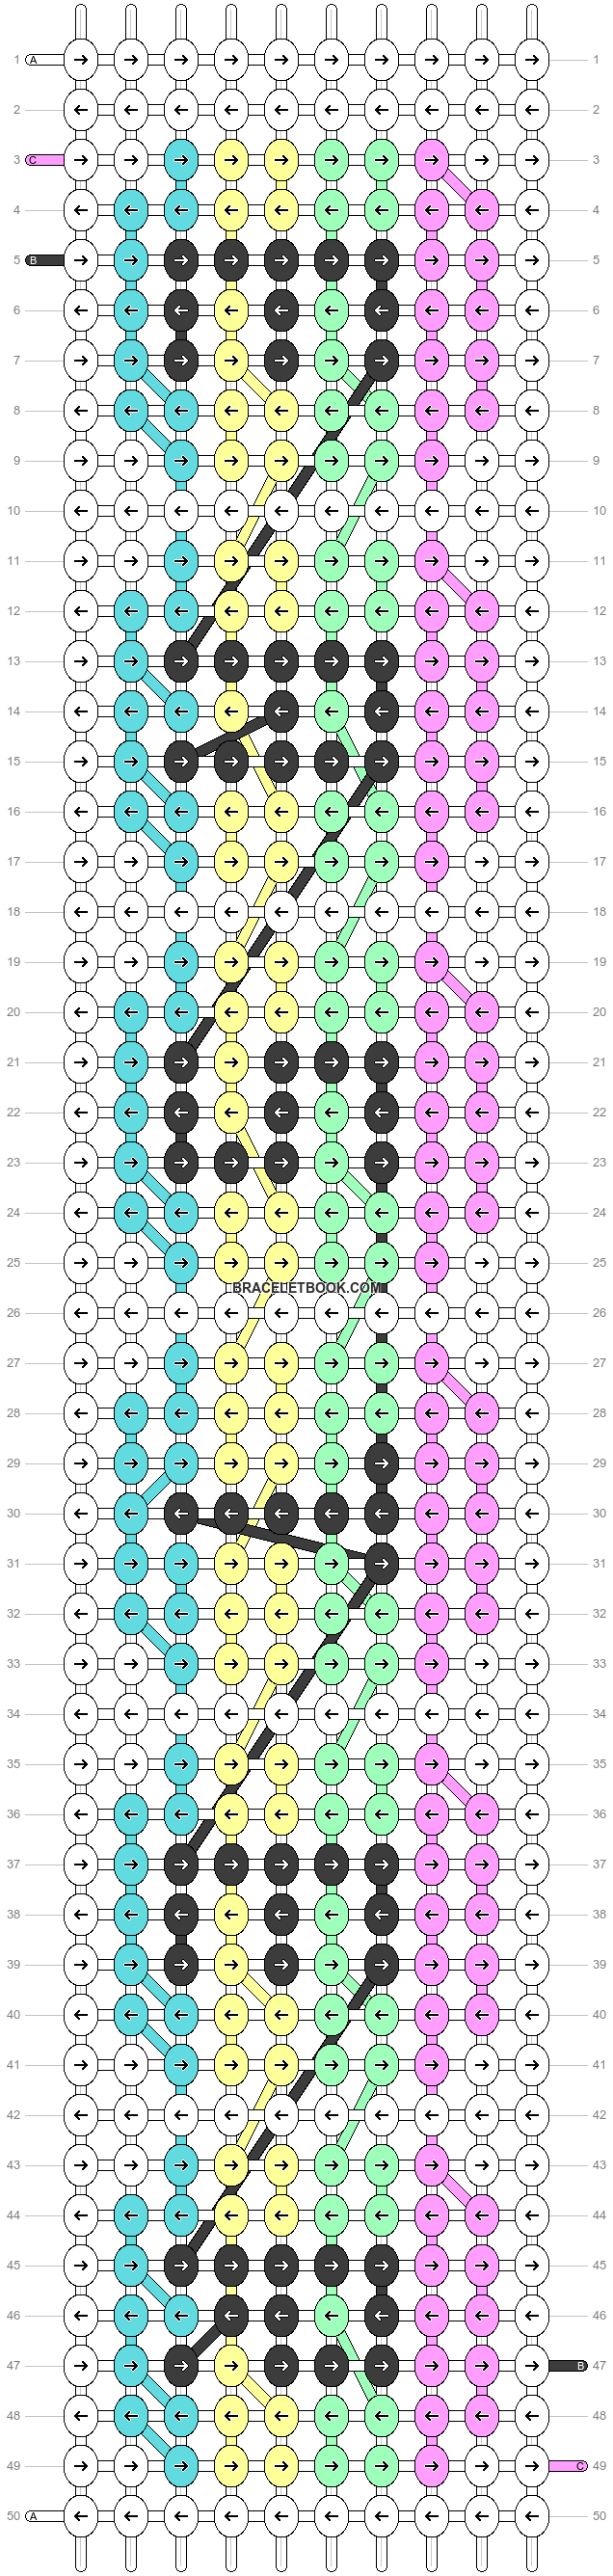 Alpha pattern #50516 pattern